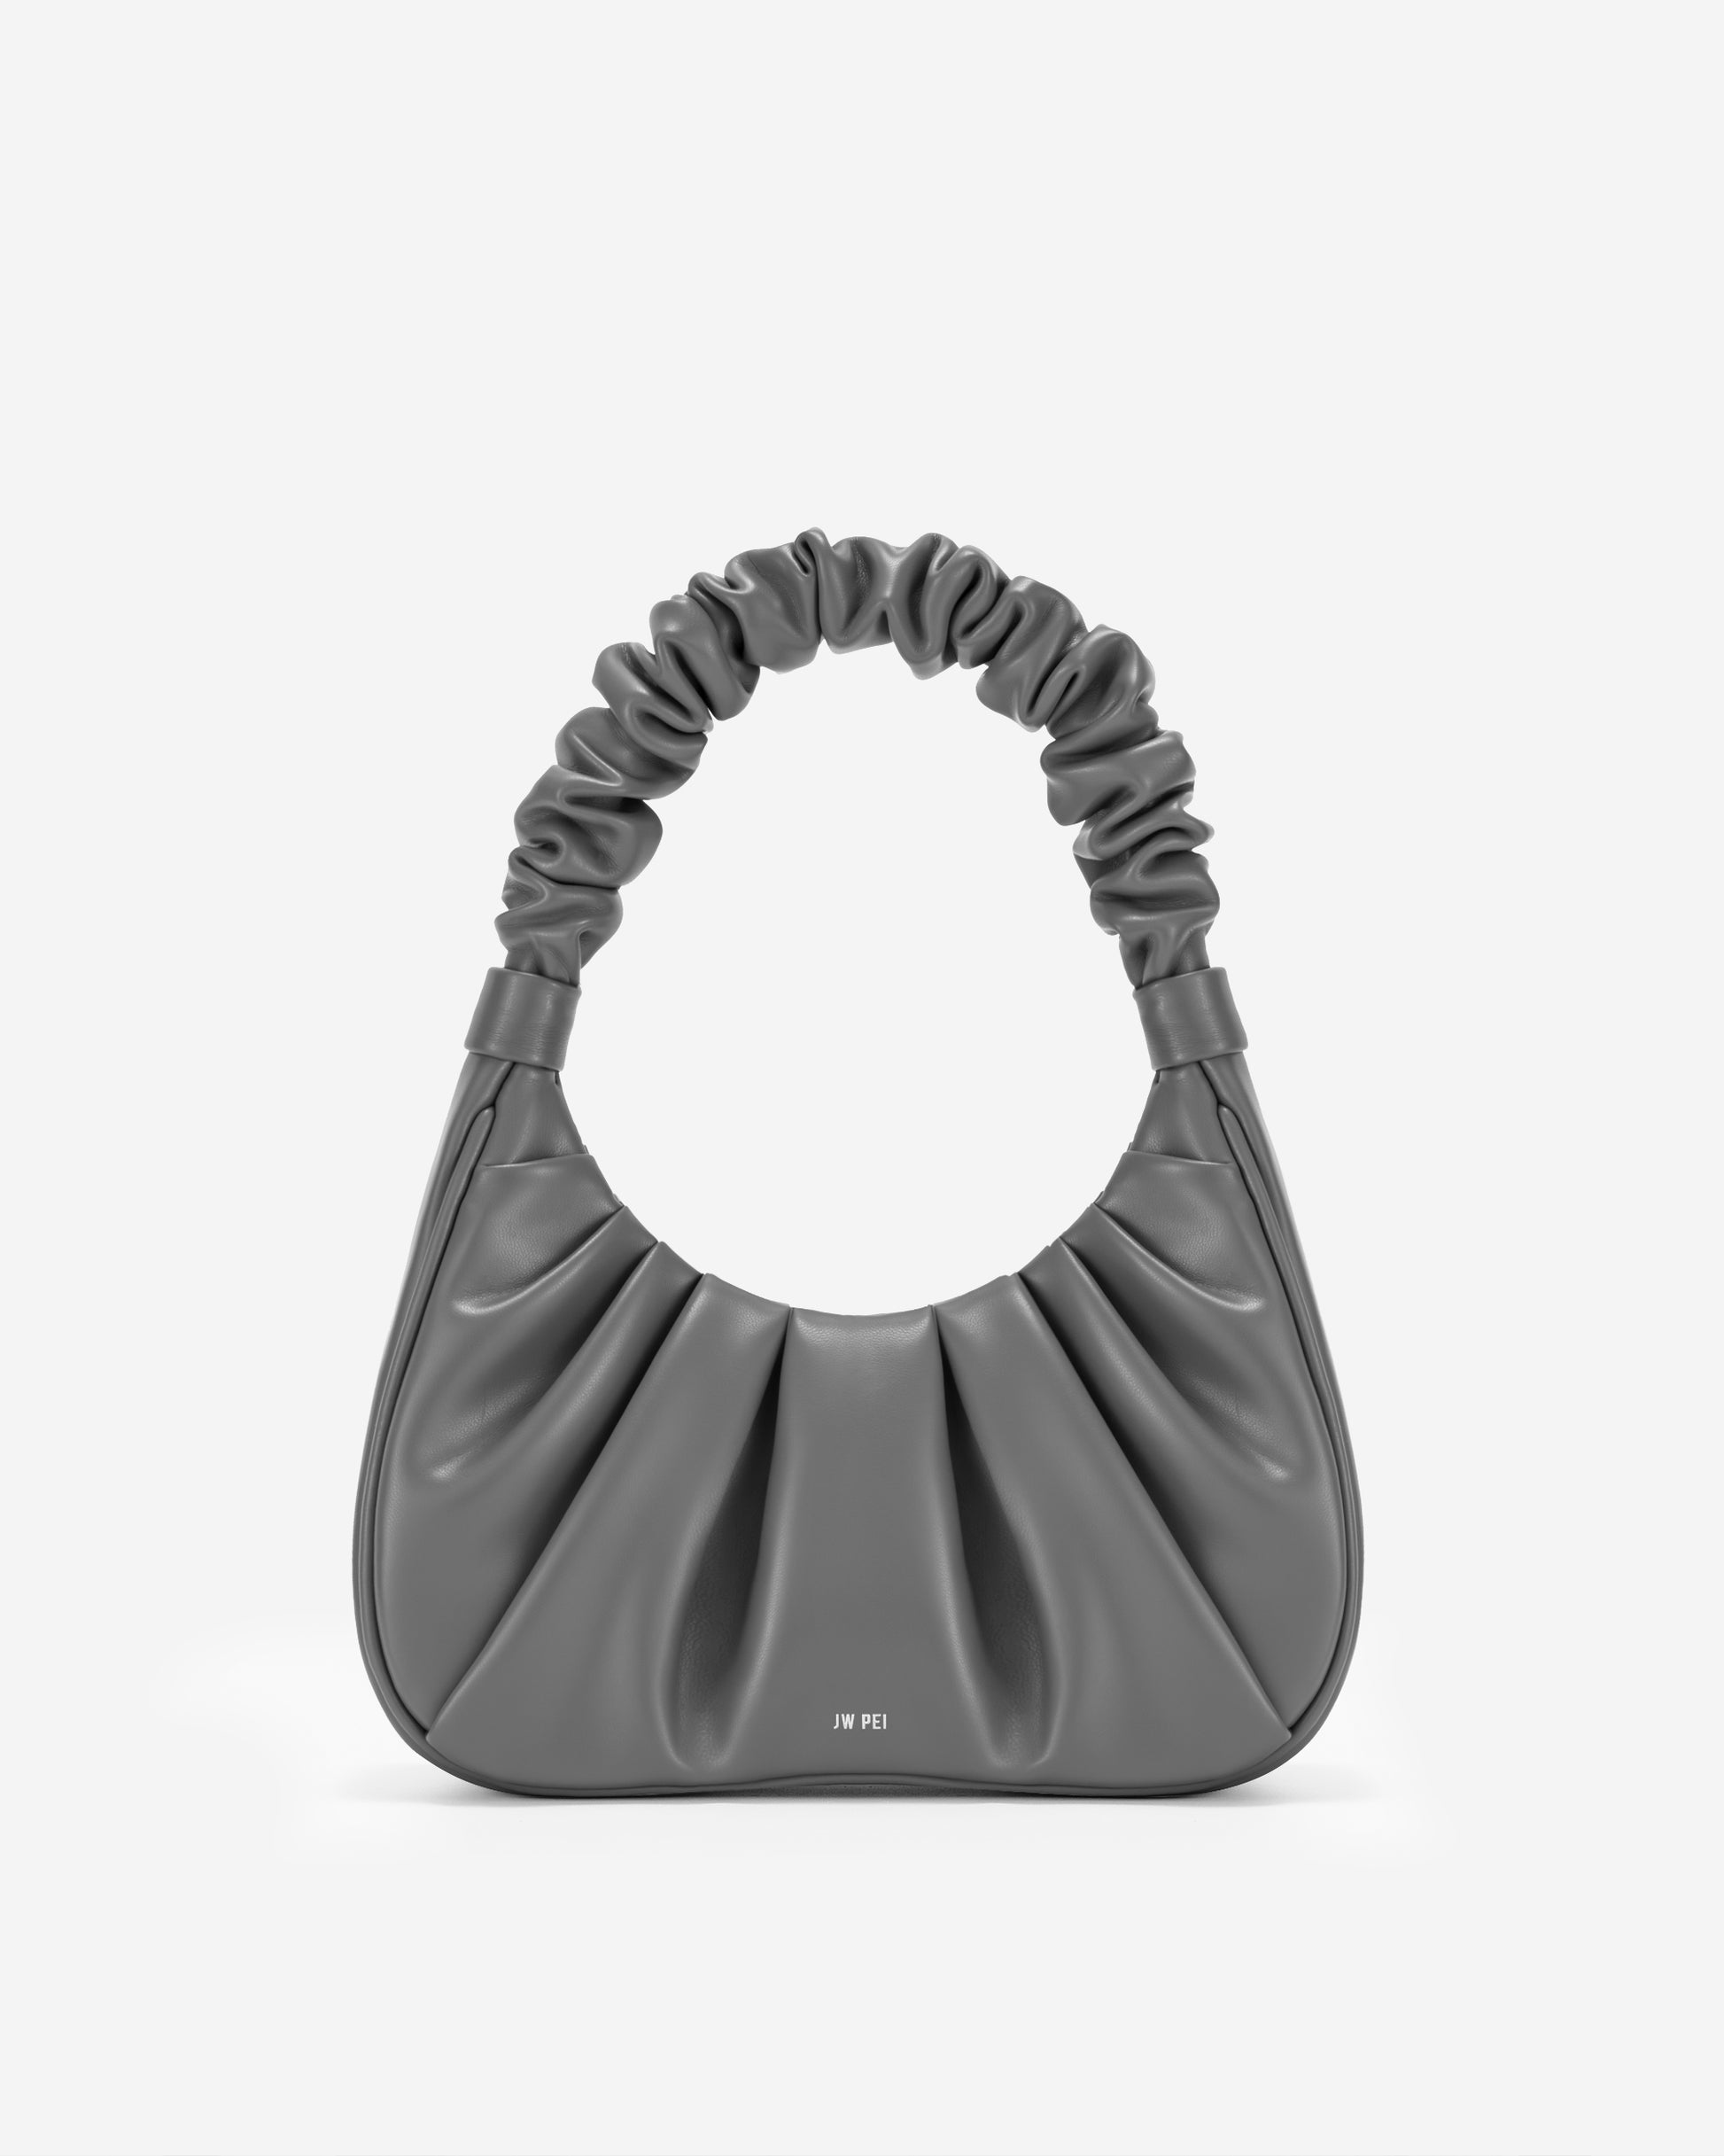 JW PEI Women's Ruby Shoulder Bag (Black Croc): Handbags